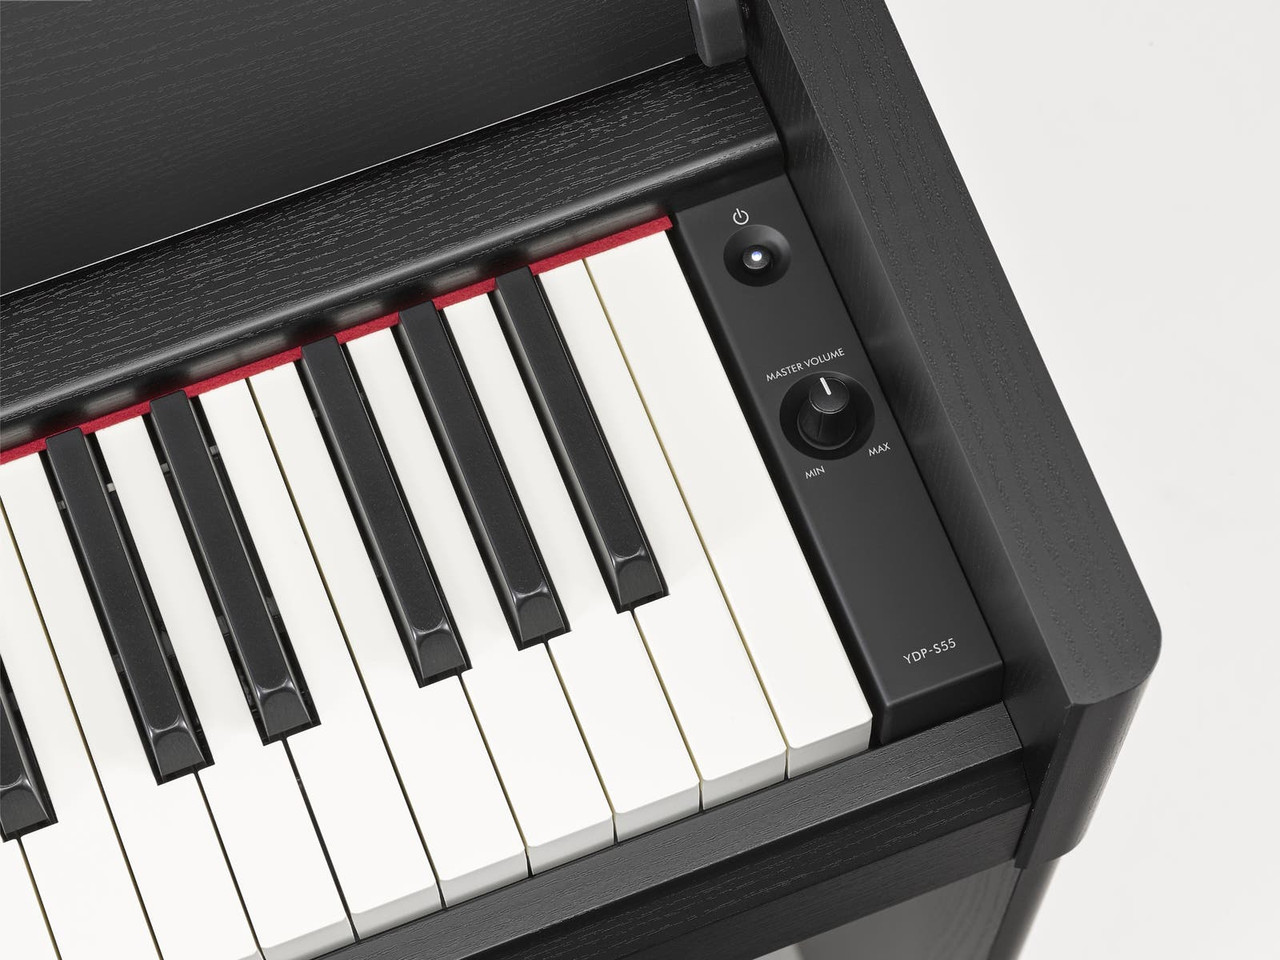 Yamaha Arius YDP-S55 Slimline Digital Piano - Black